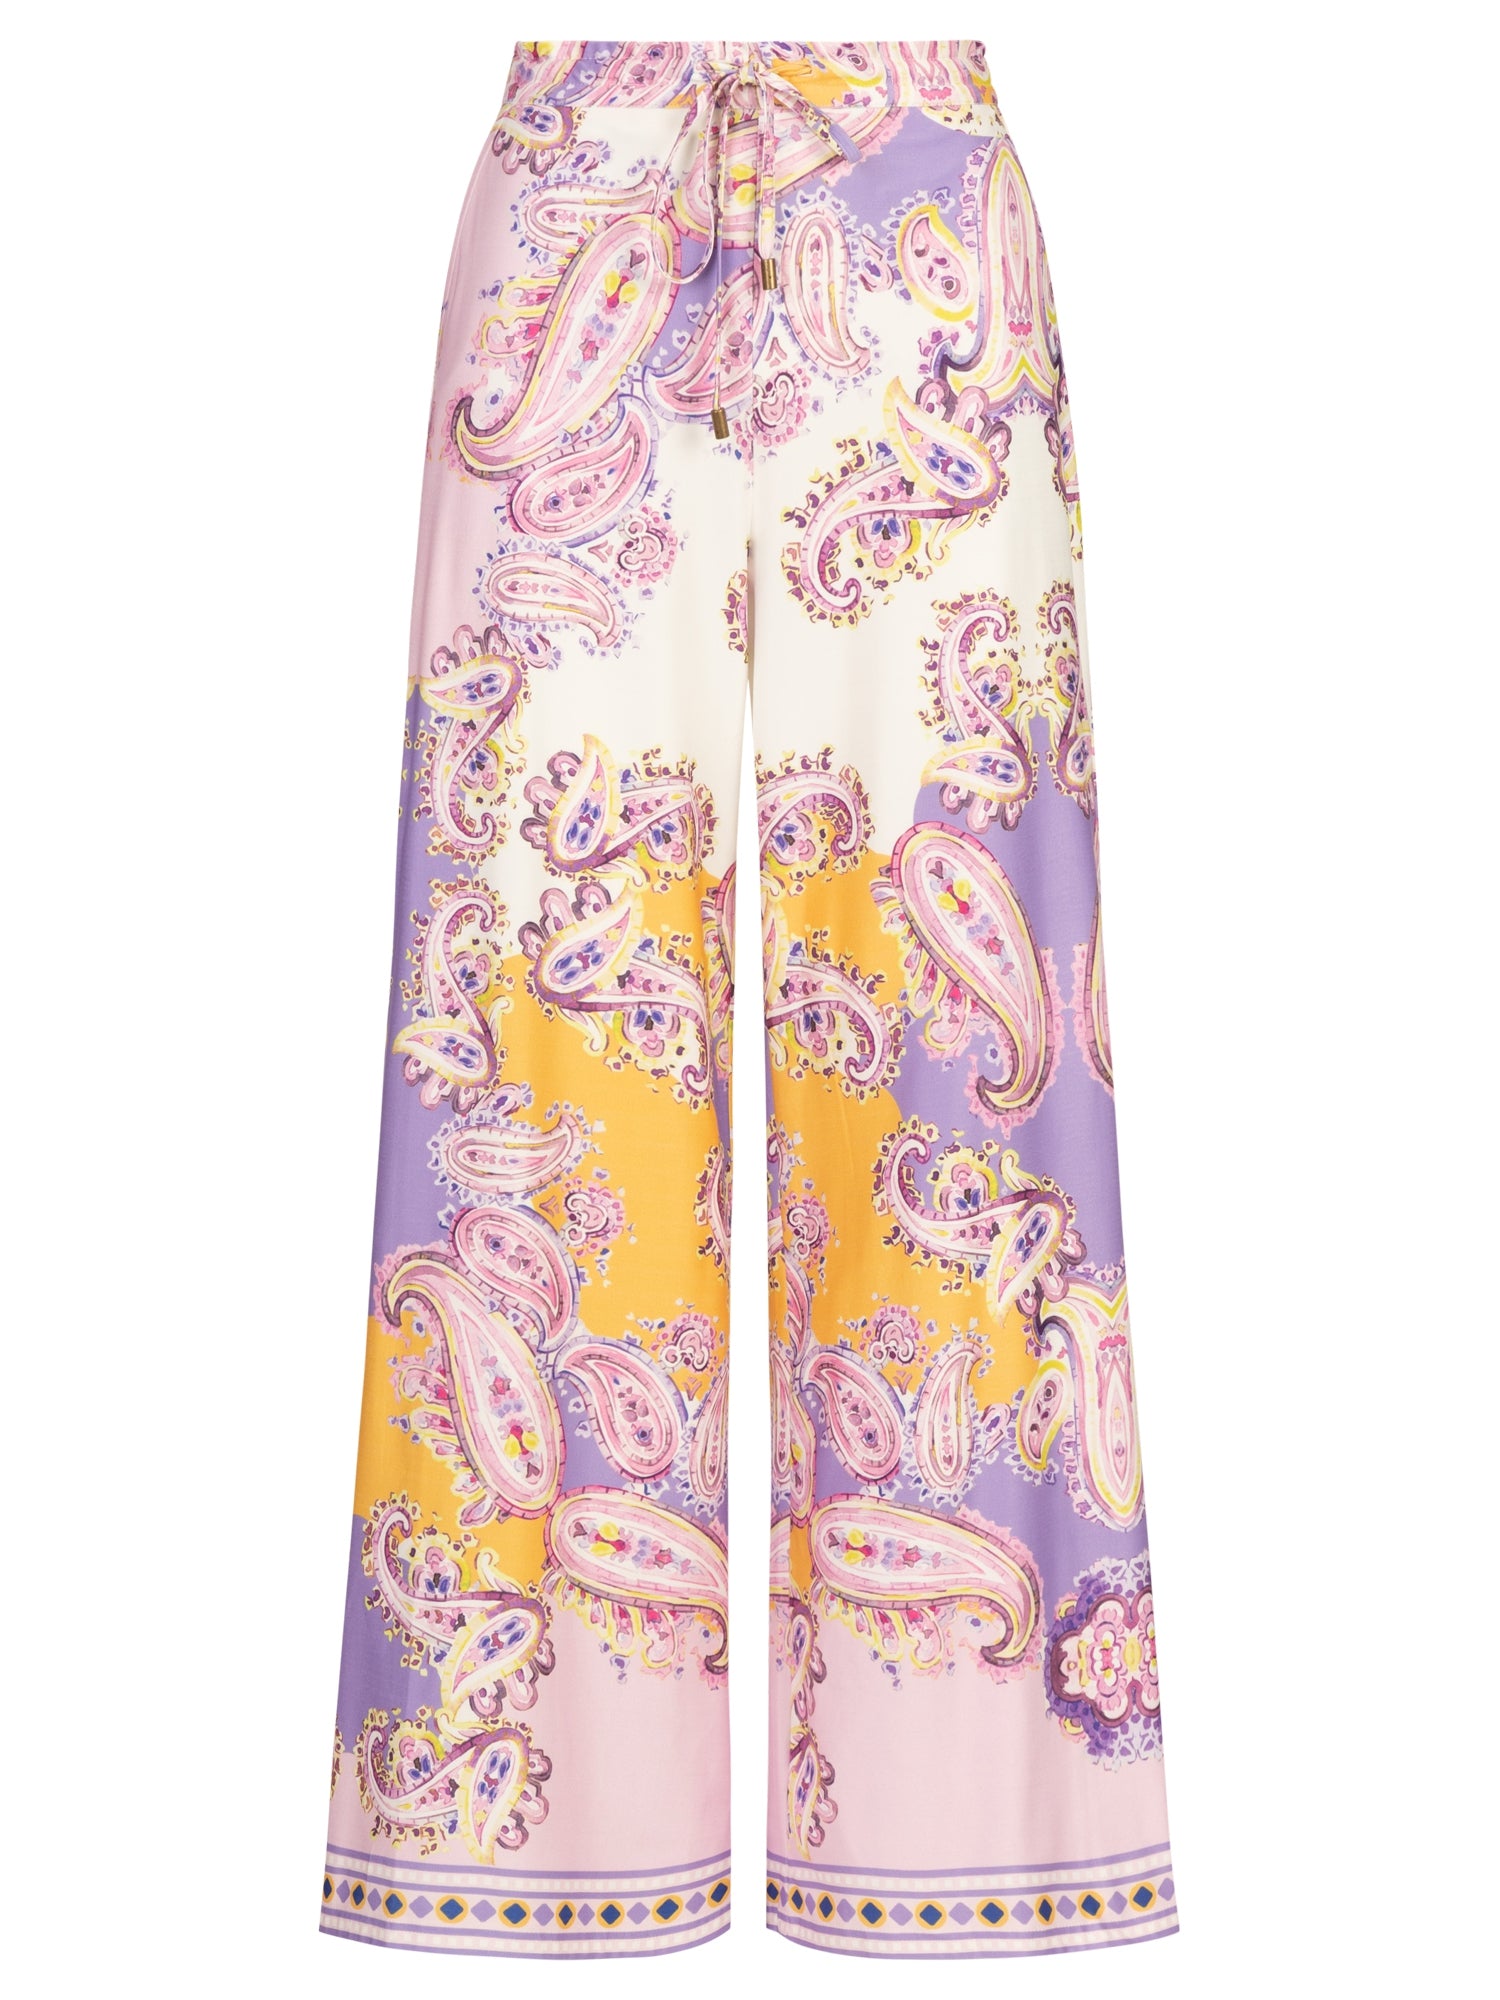 Mint & Mia Sommer Hose aus hochwertigem Polyester Material mit Modisch Stil | helllila-multicolor